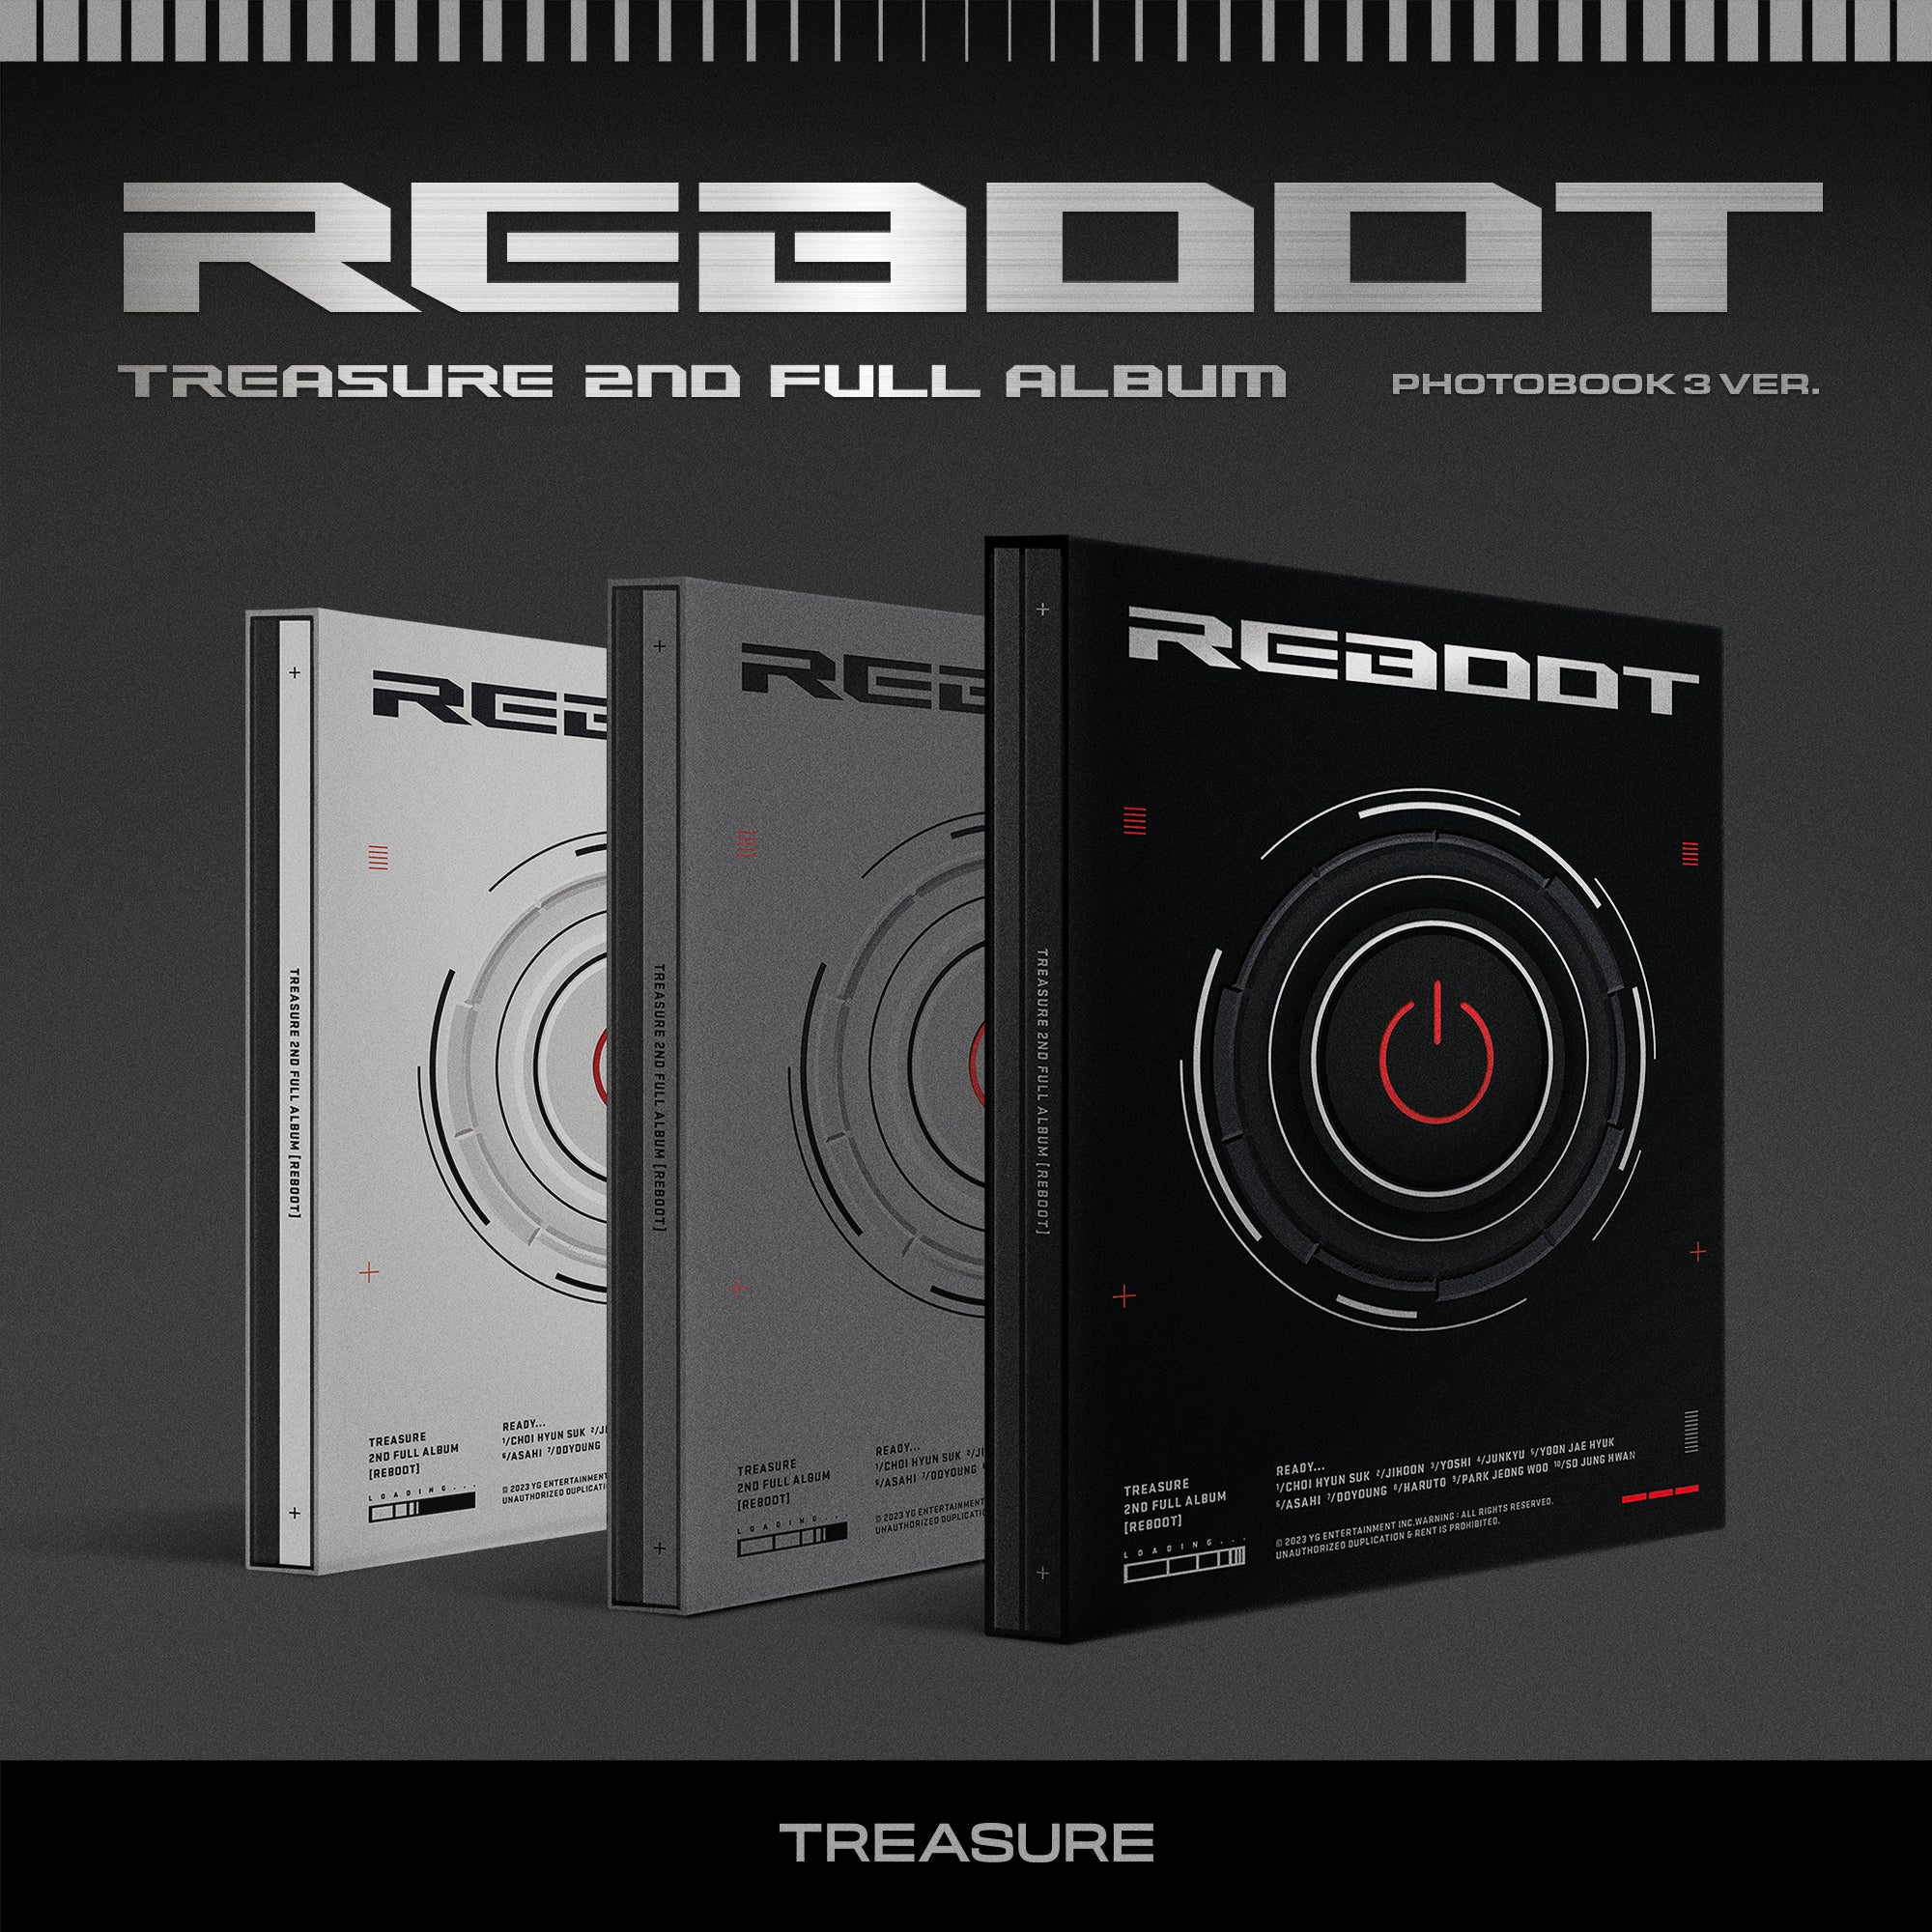 TREASURE - 2.º álbum completo REBOOT (PHOTOBOOK ver.)